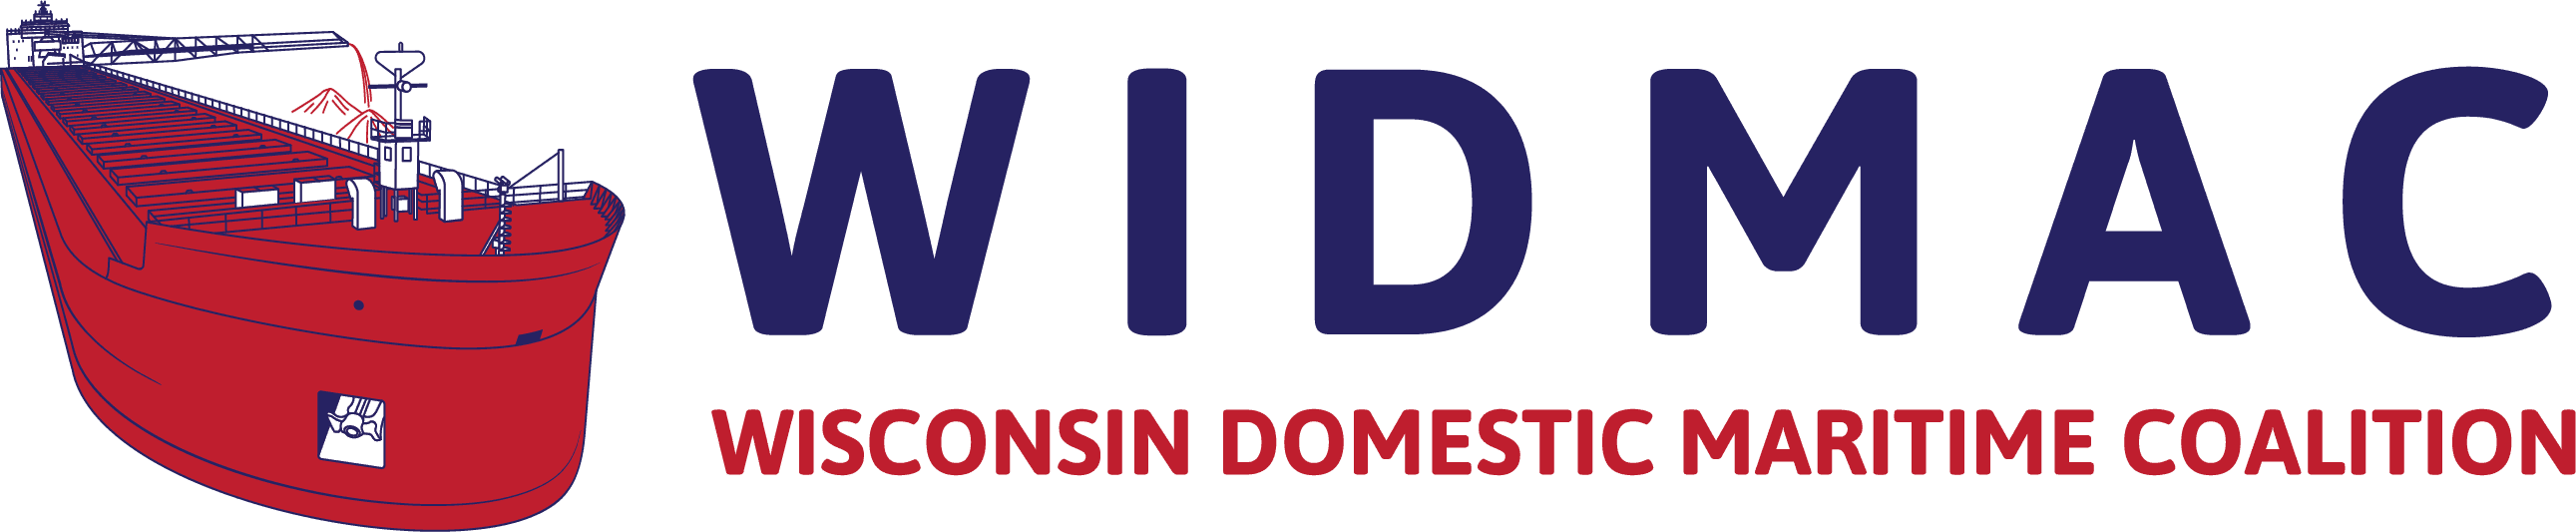 WIDMAC | Wisconsin Domestic Maritime Coalition